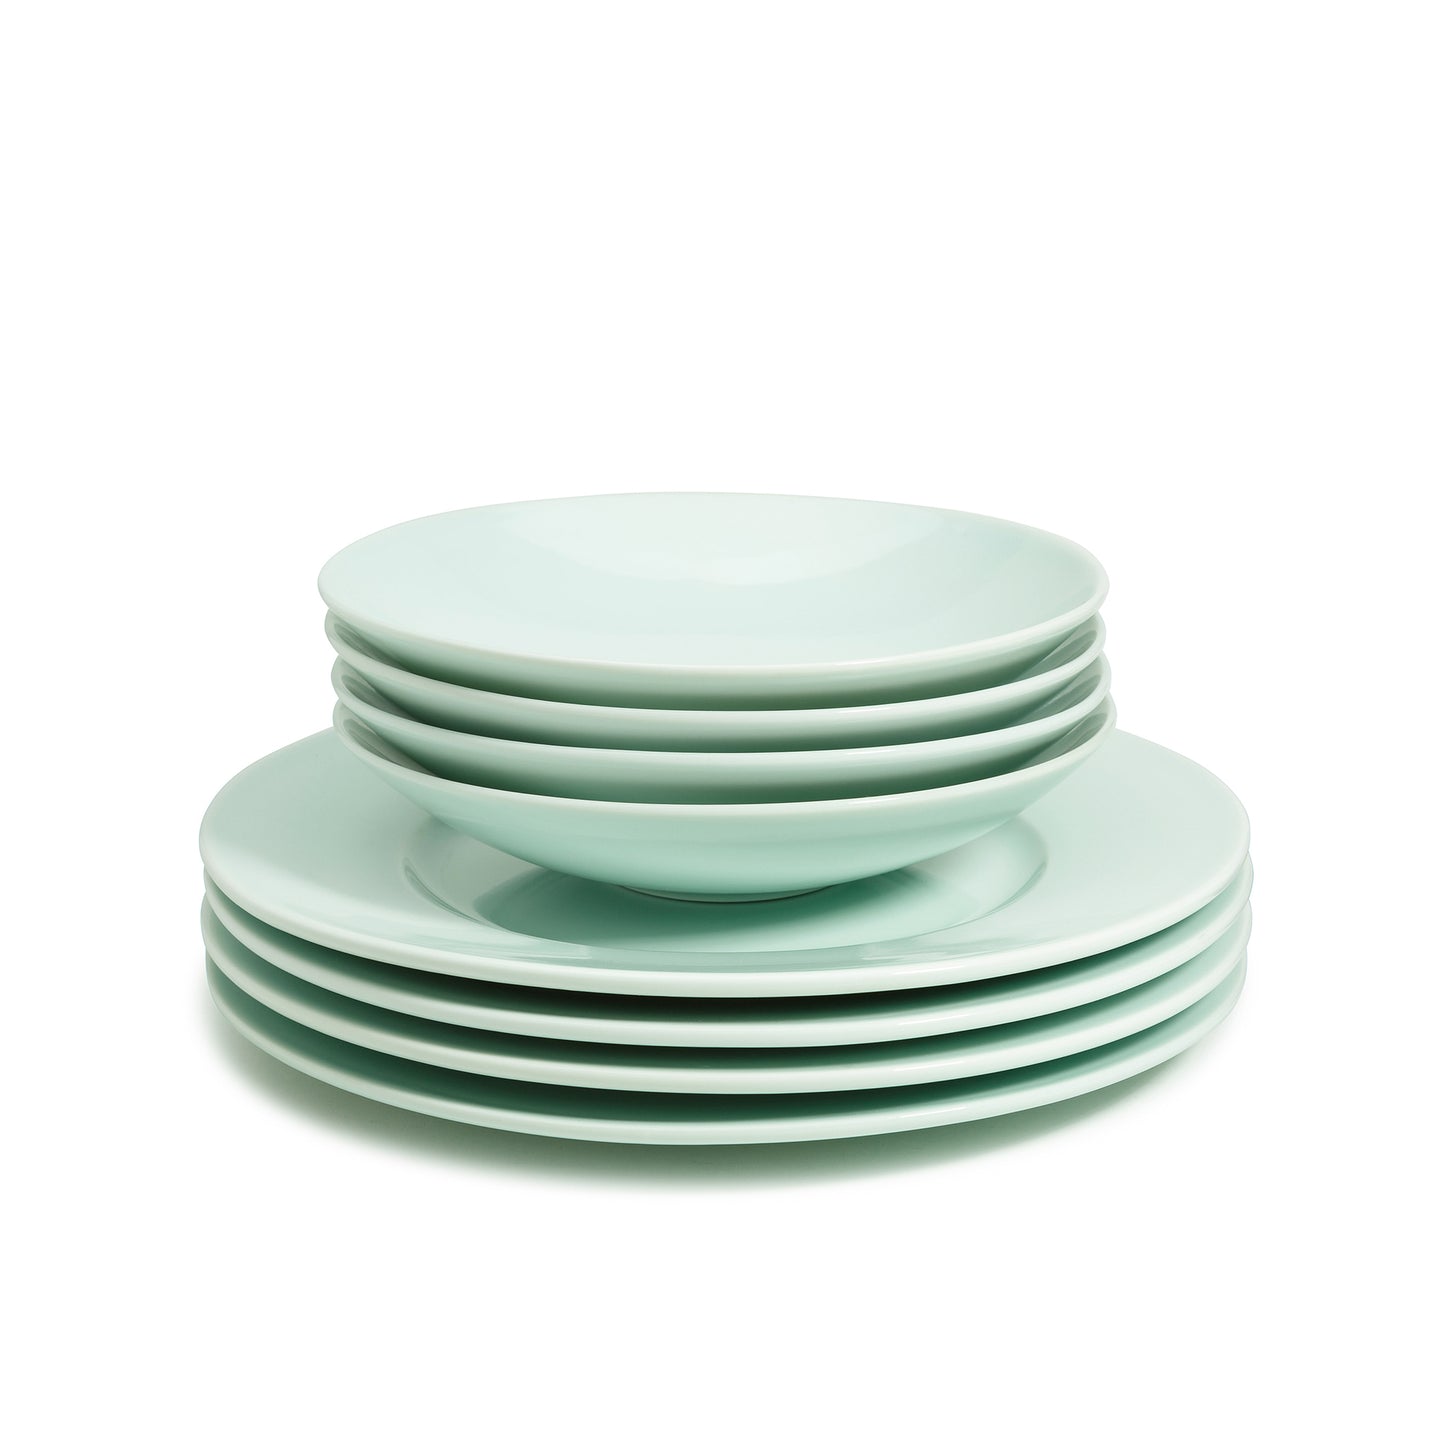 8 piece green celadon porcelain dinnerware set, 11 3/4" wide rim dinner plates, 8" salad/soup bowls, media 5 of 6